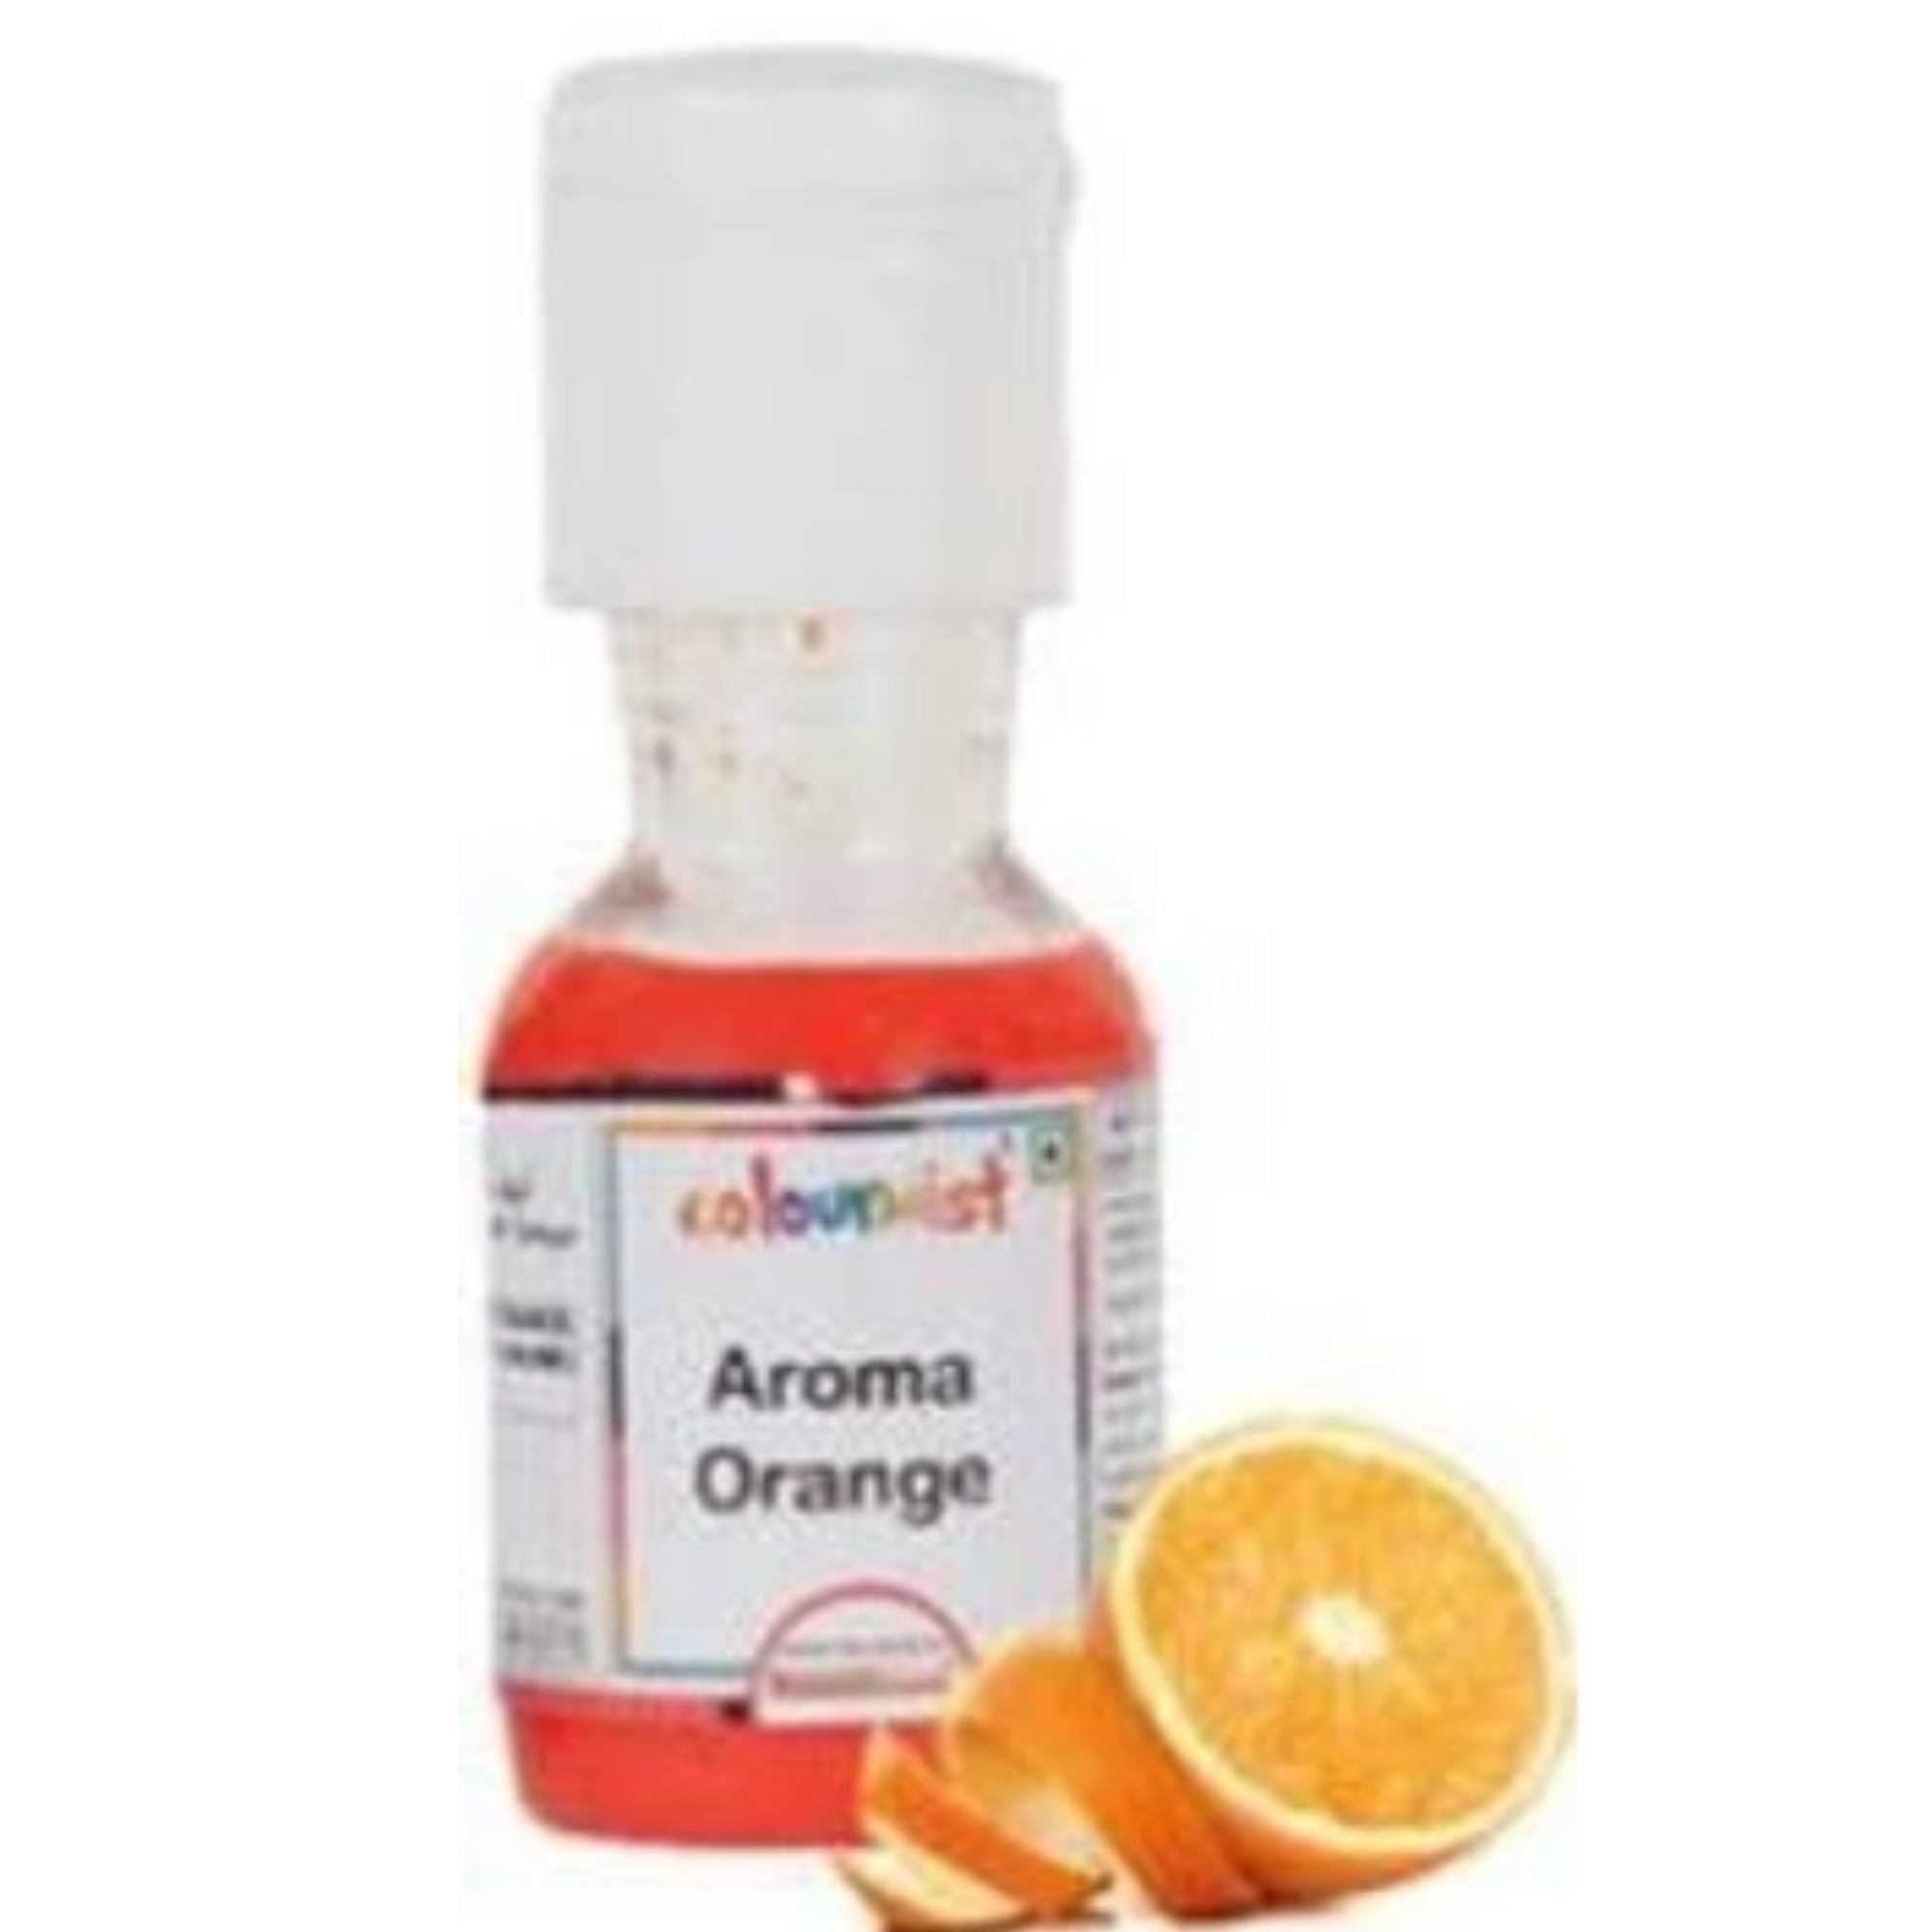 Colourmist Aroma Orange  , 20g